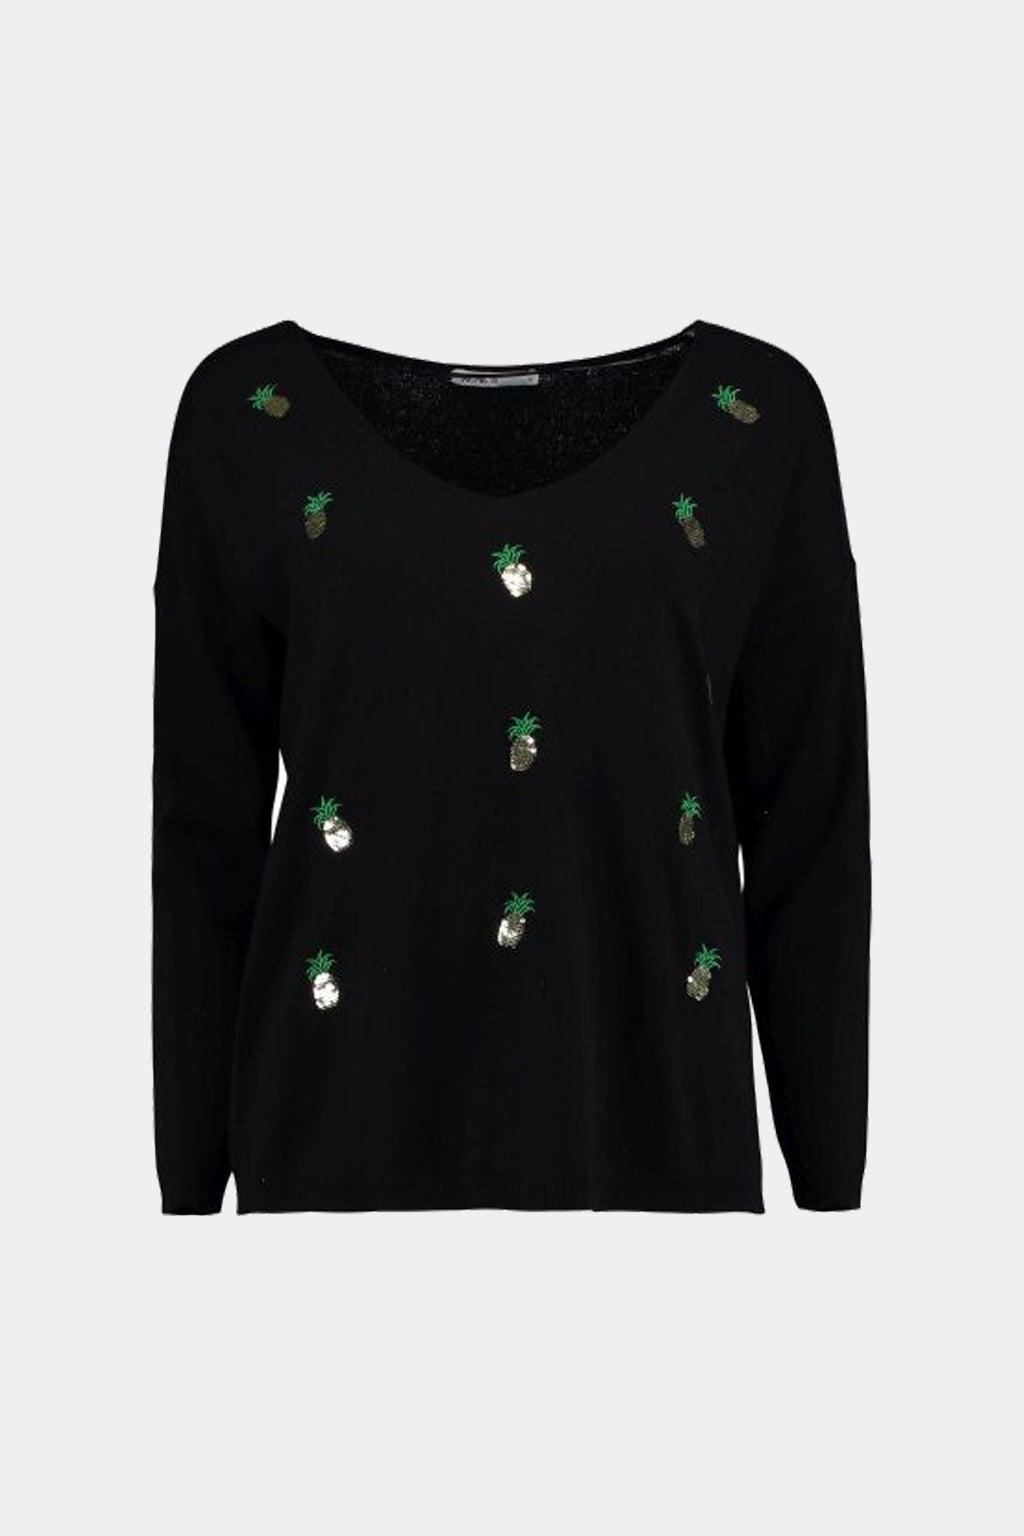 Hailys - Women's Sweatshirt Pineapple Design